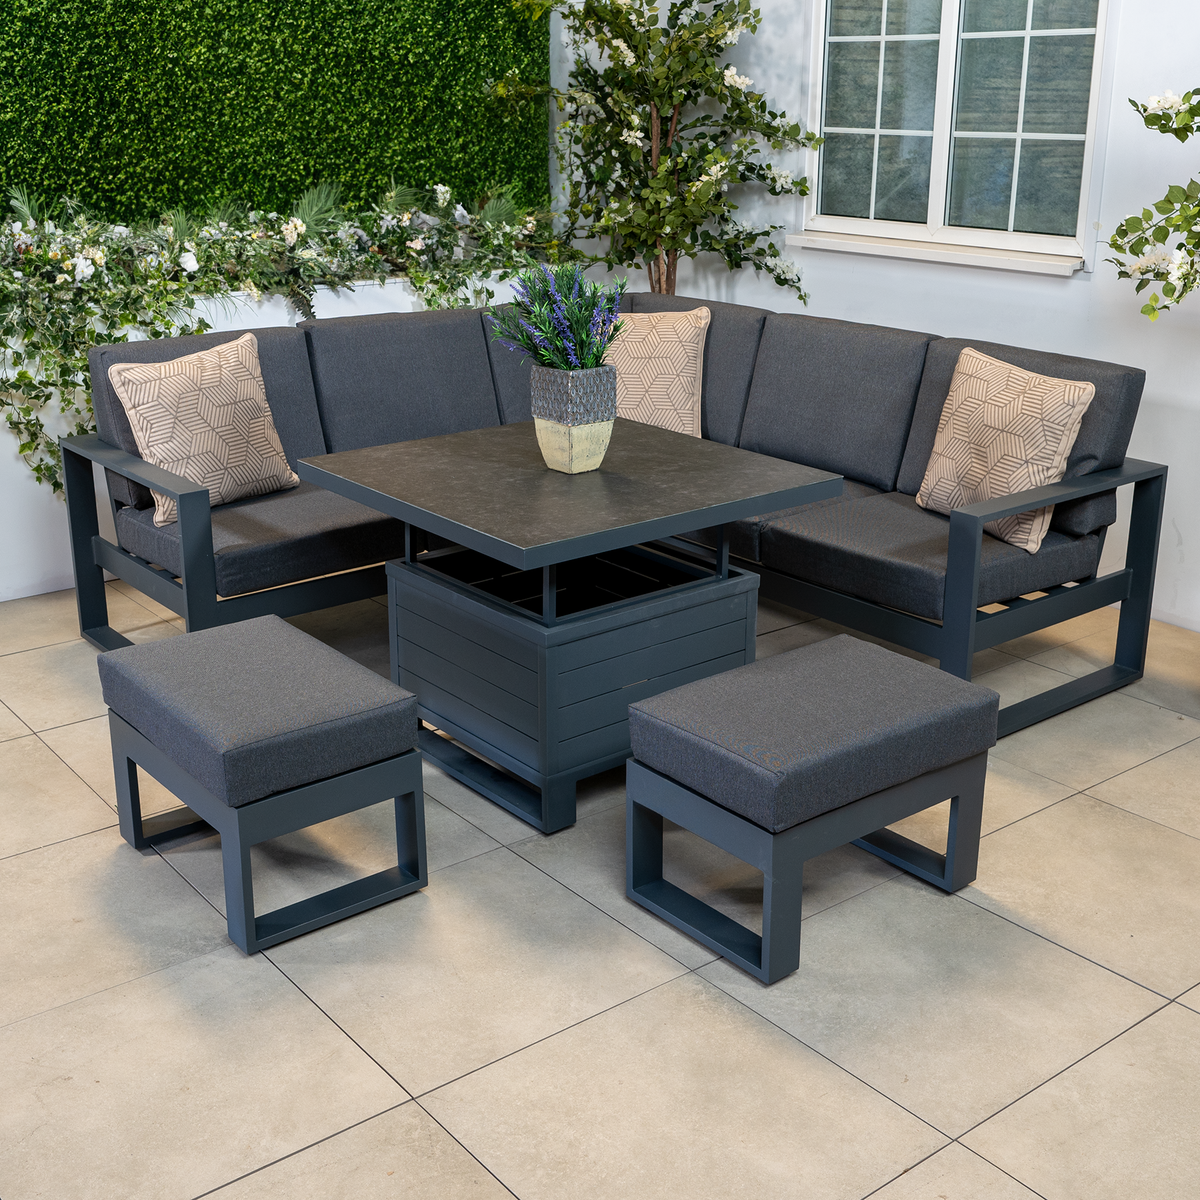 Bracken Outdoors Portland Aluminium Compact Corner Garden Furniture Set with Adjustable Table